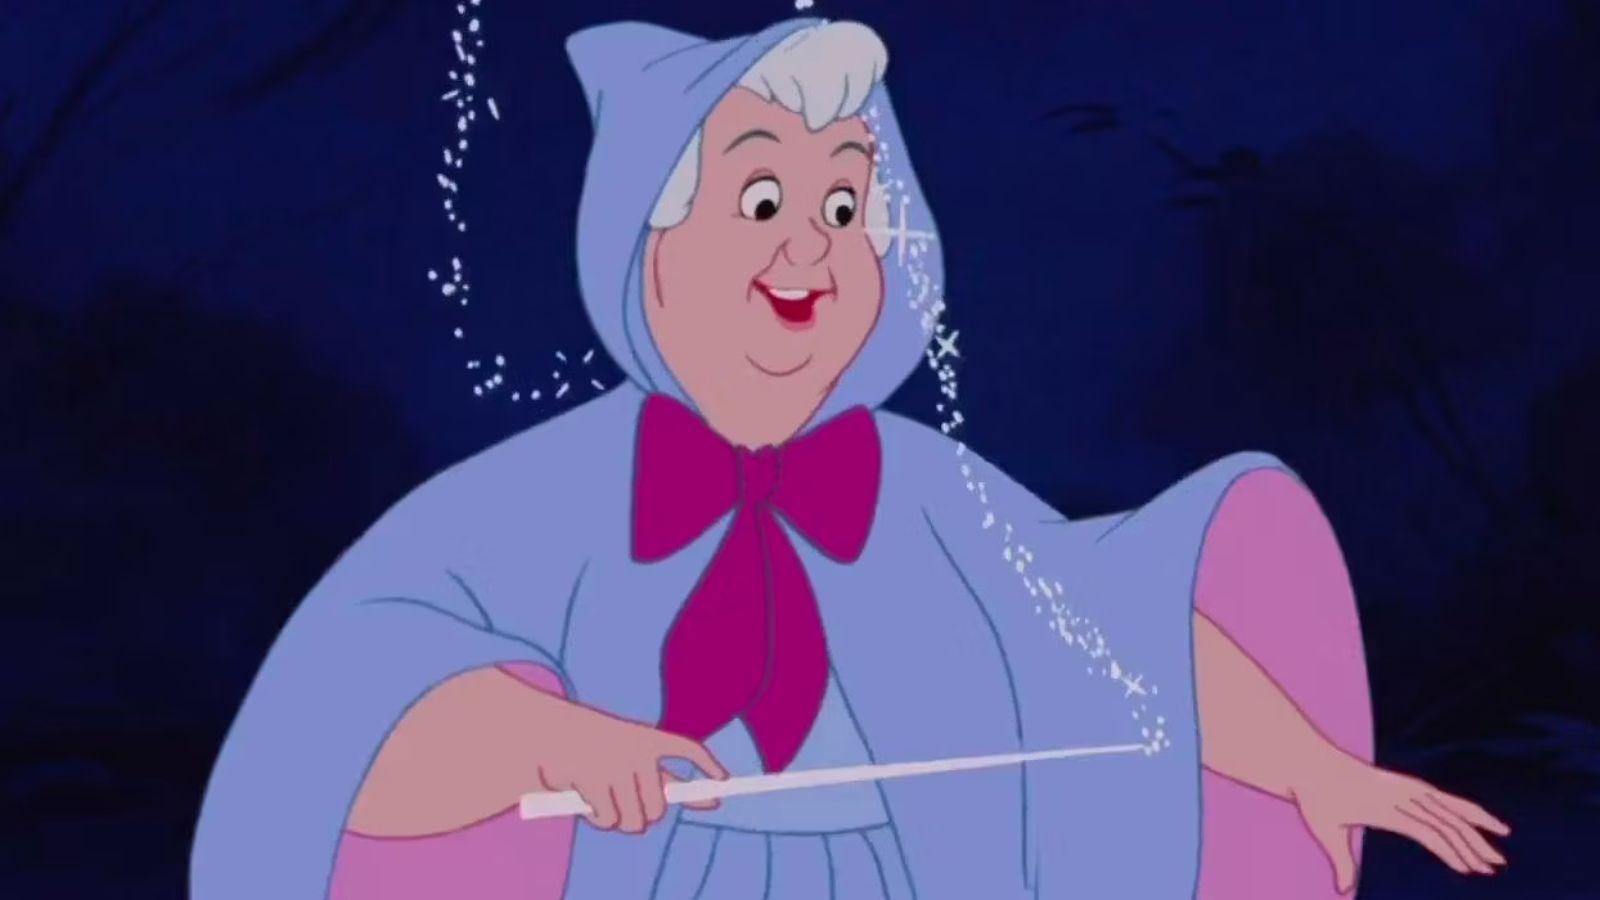 Disney Dreamlight Valley teases Fairy Godmother debut